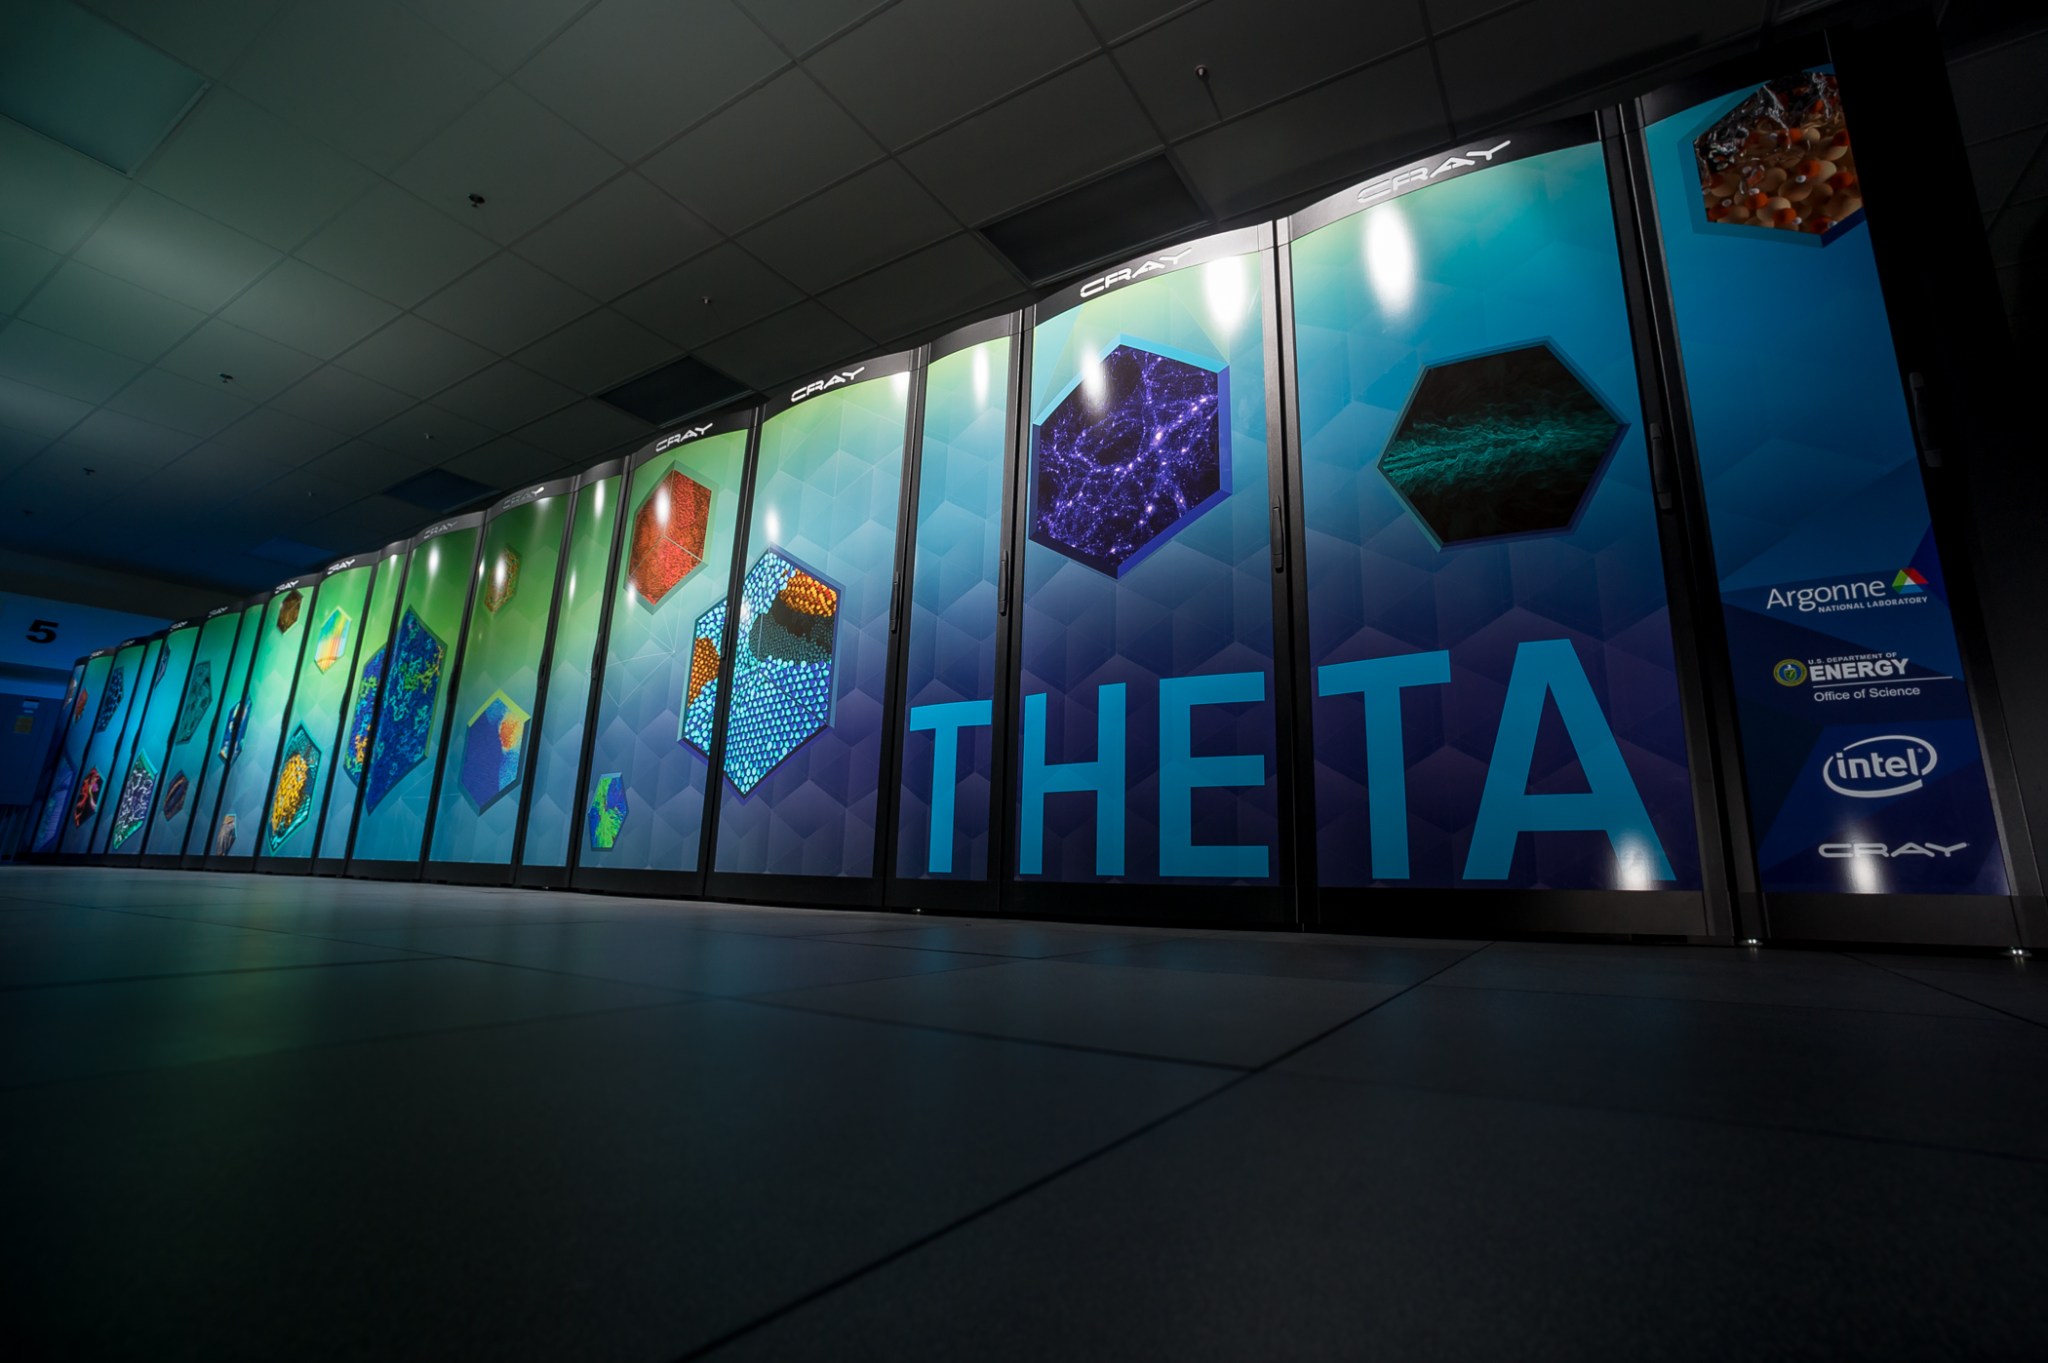 Argonne's Theta supercomputer